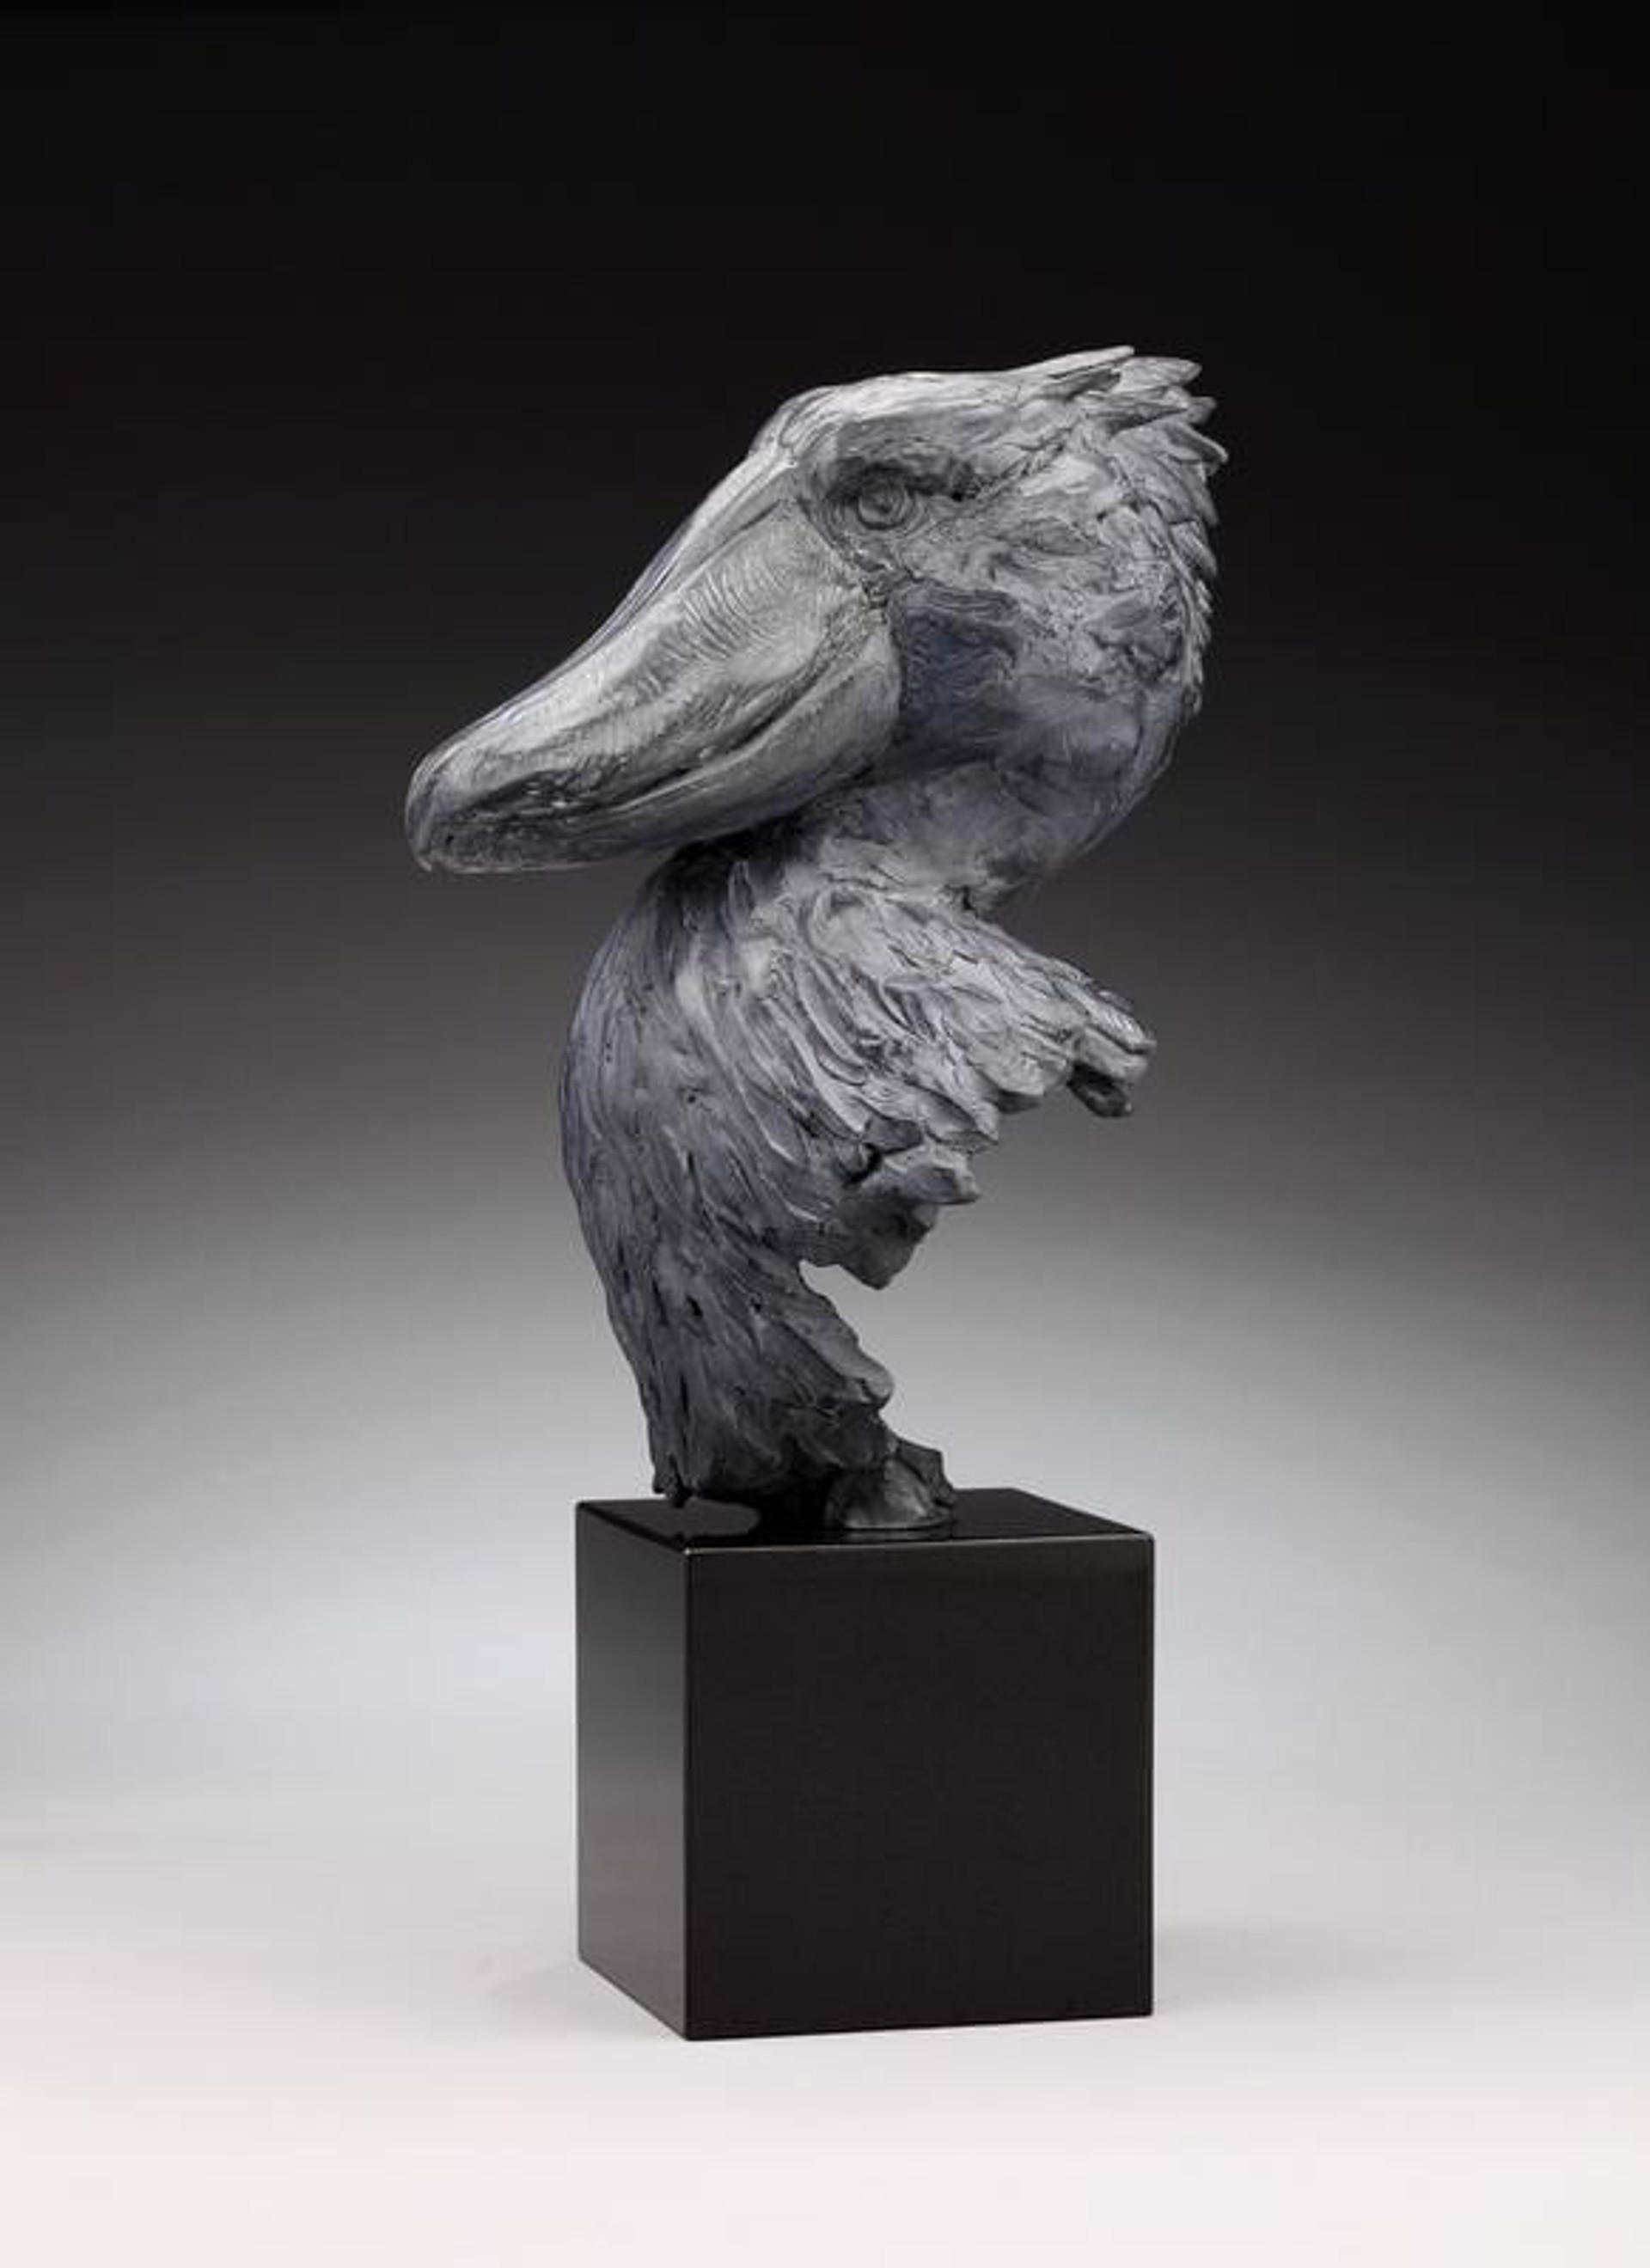 Shoebill (Ed. 10) by Daniel Glanz (sculptor)